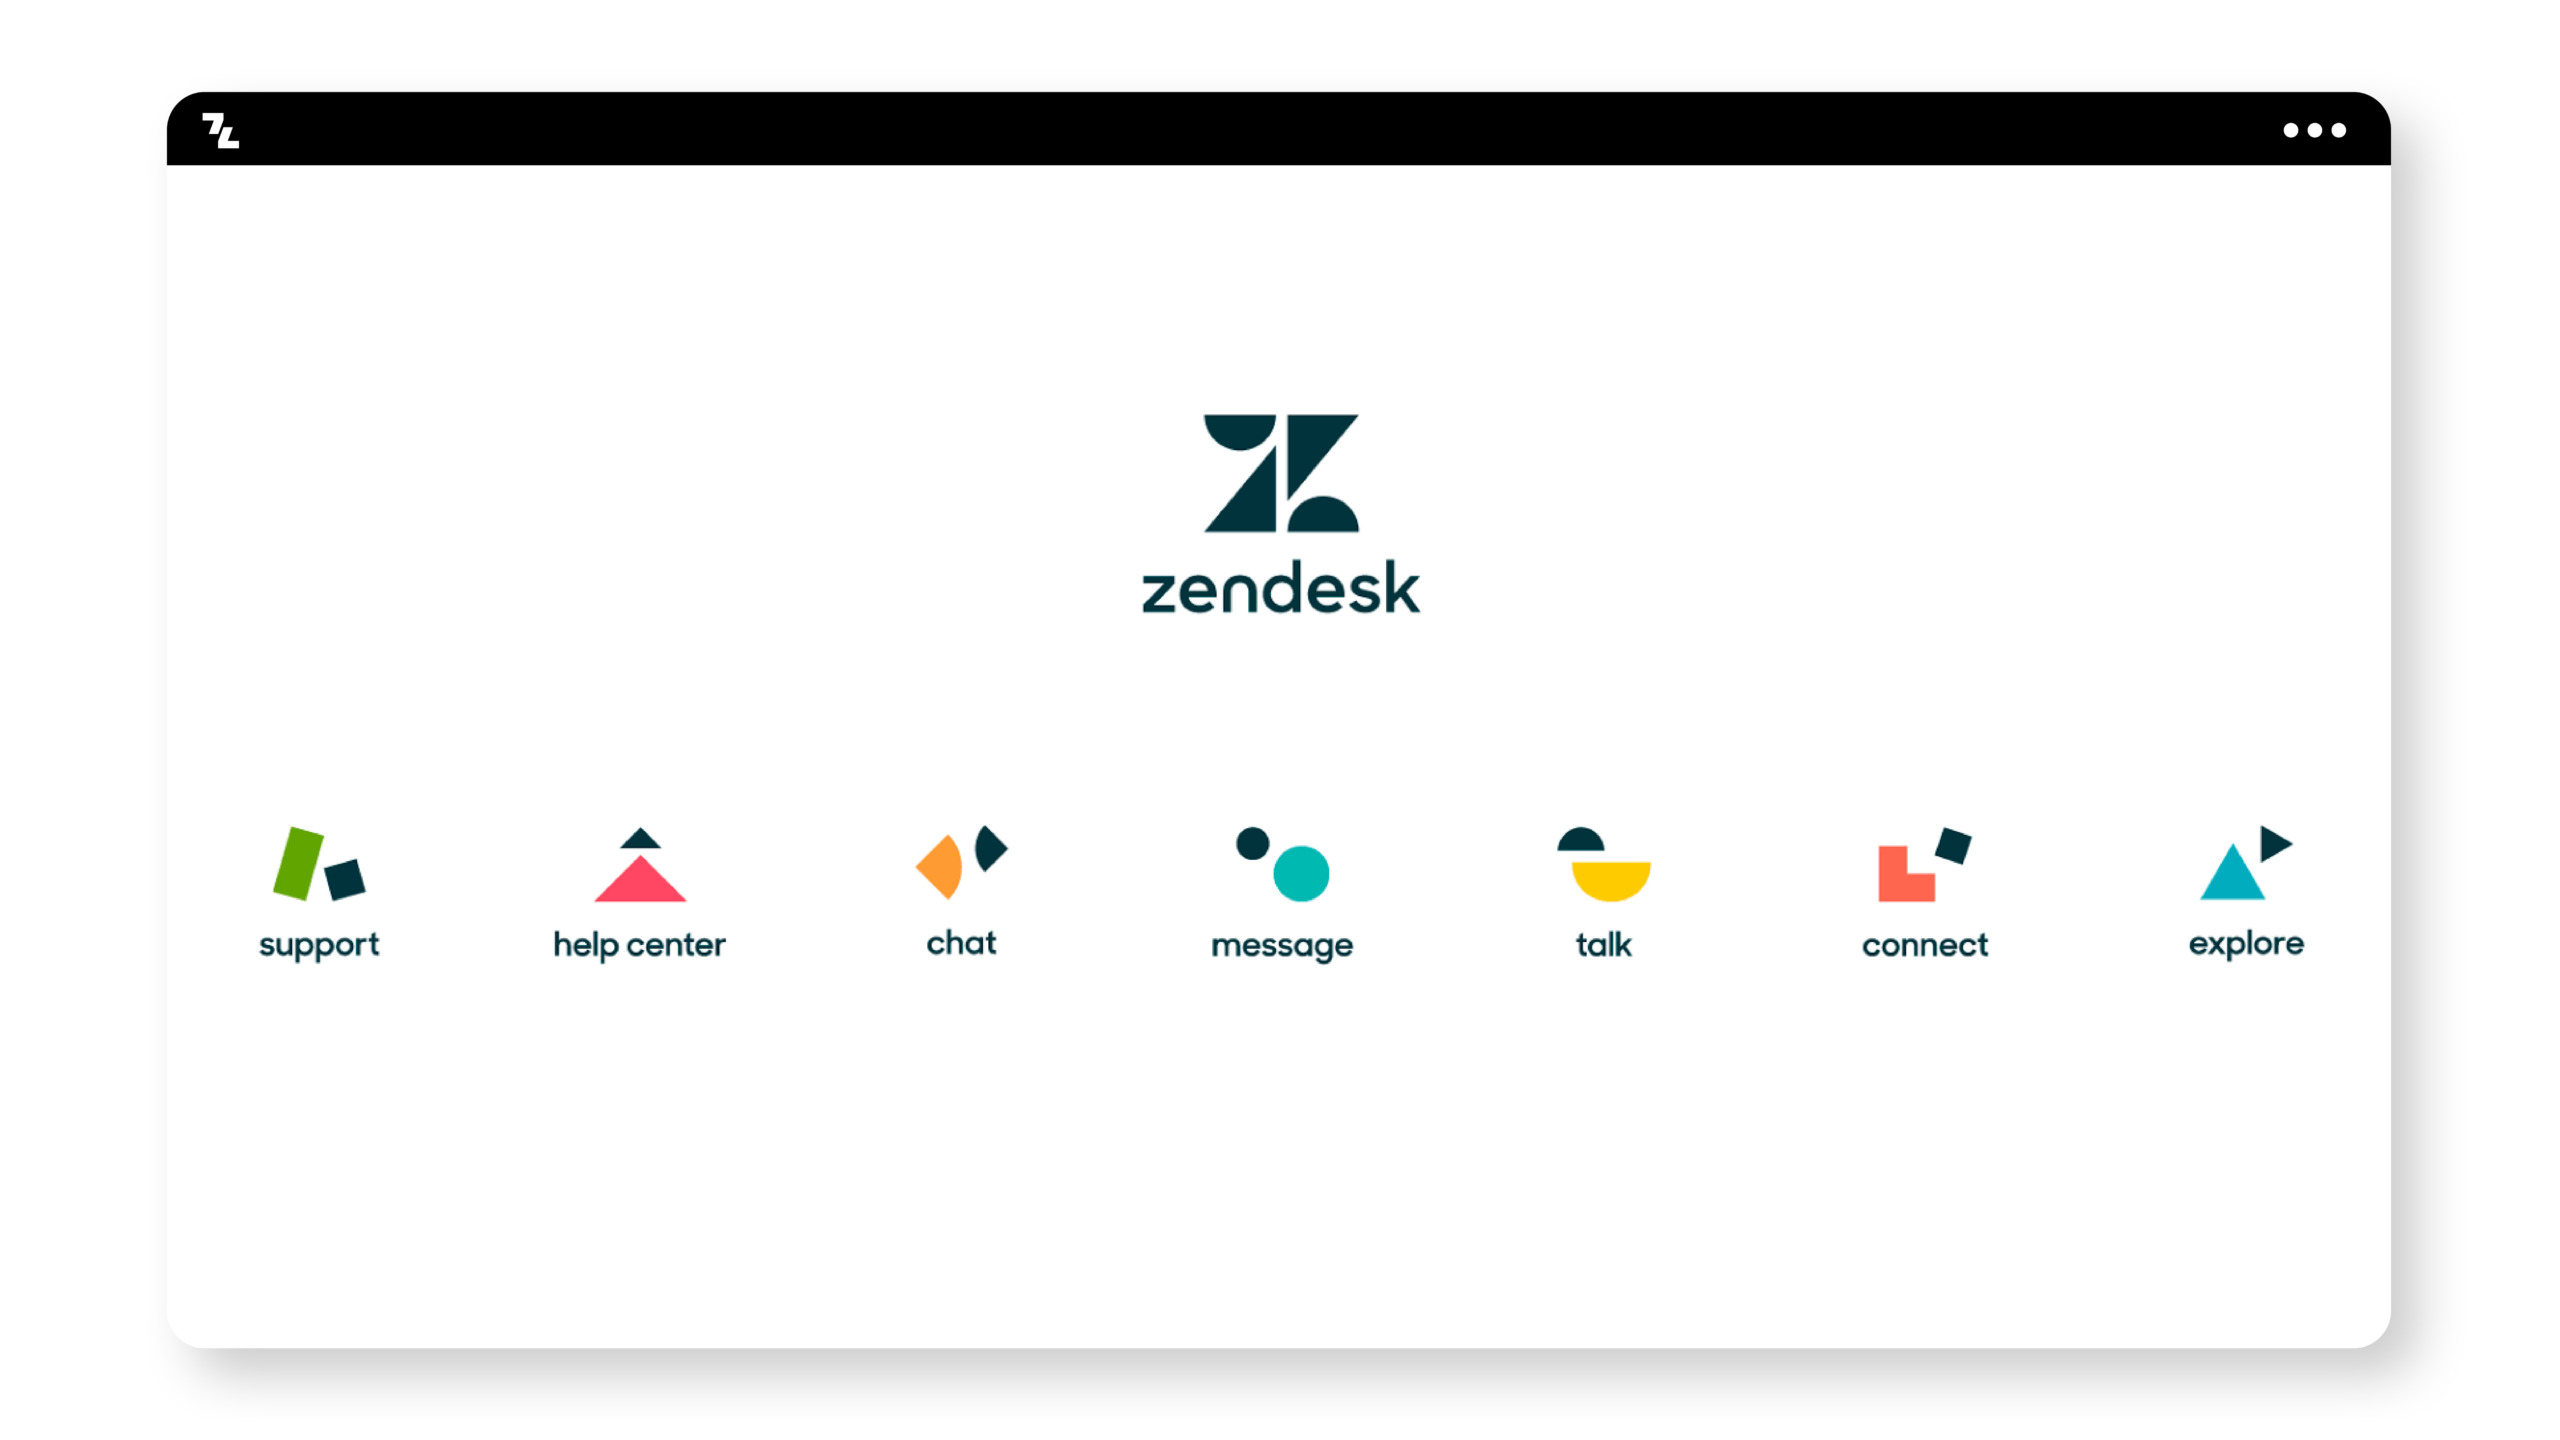 The zendek logo is displayed on a computer screen.